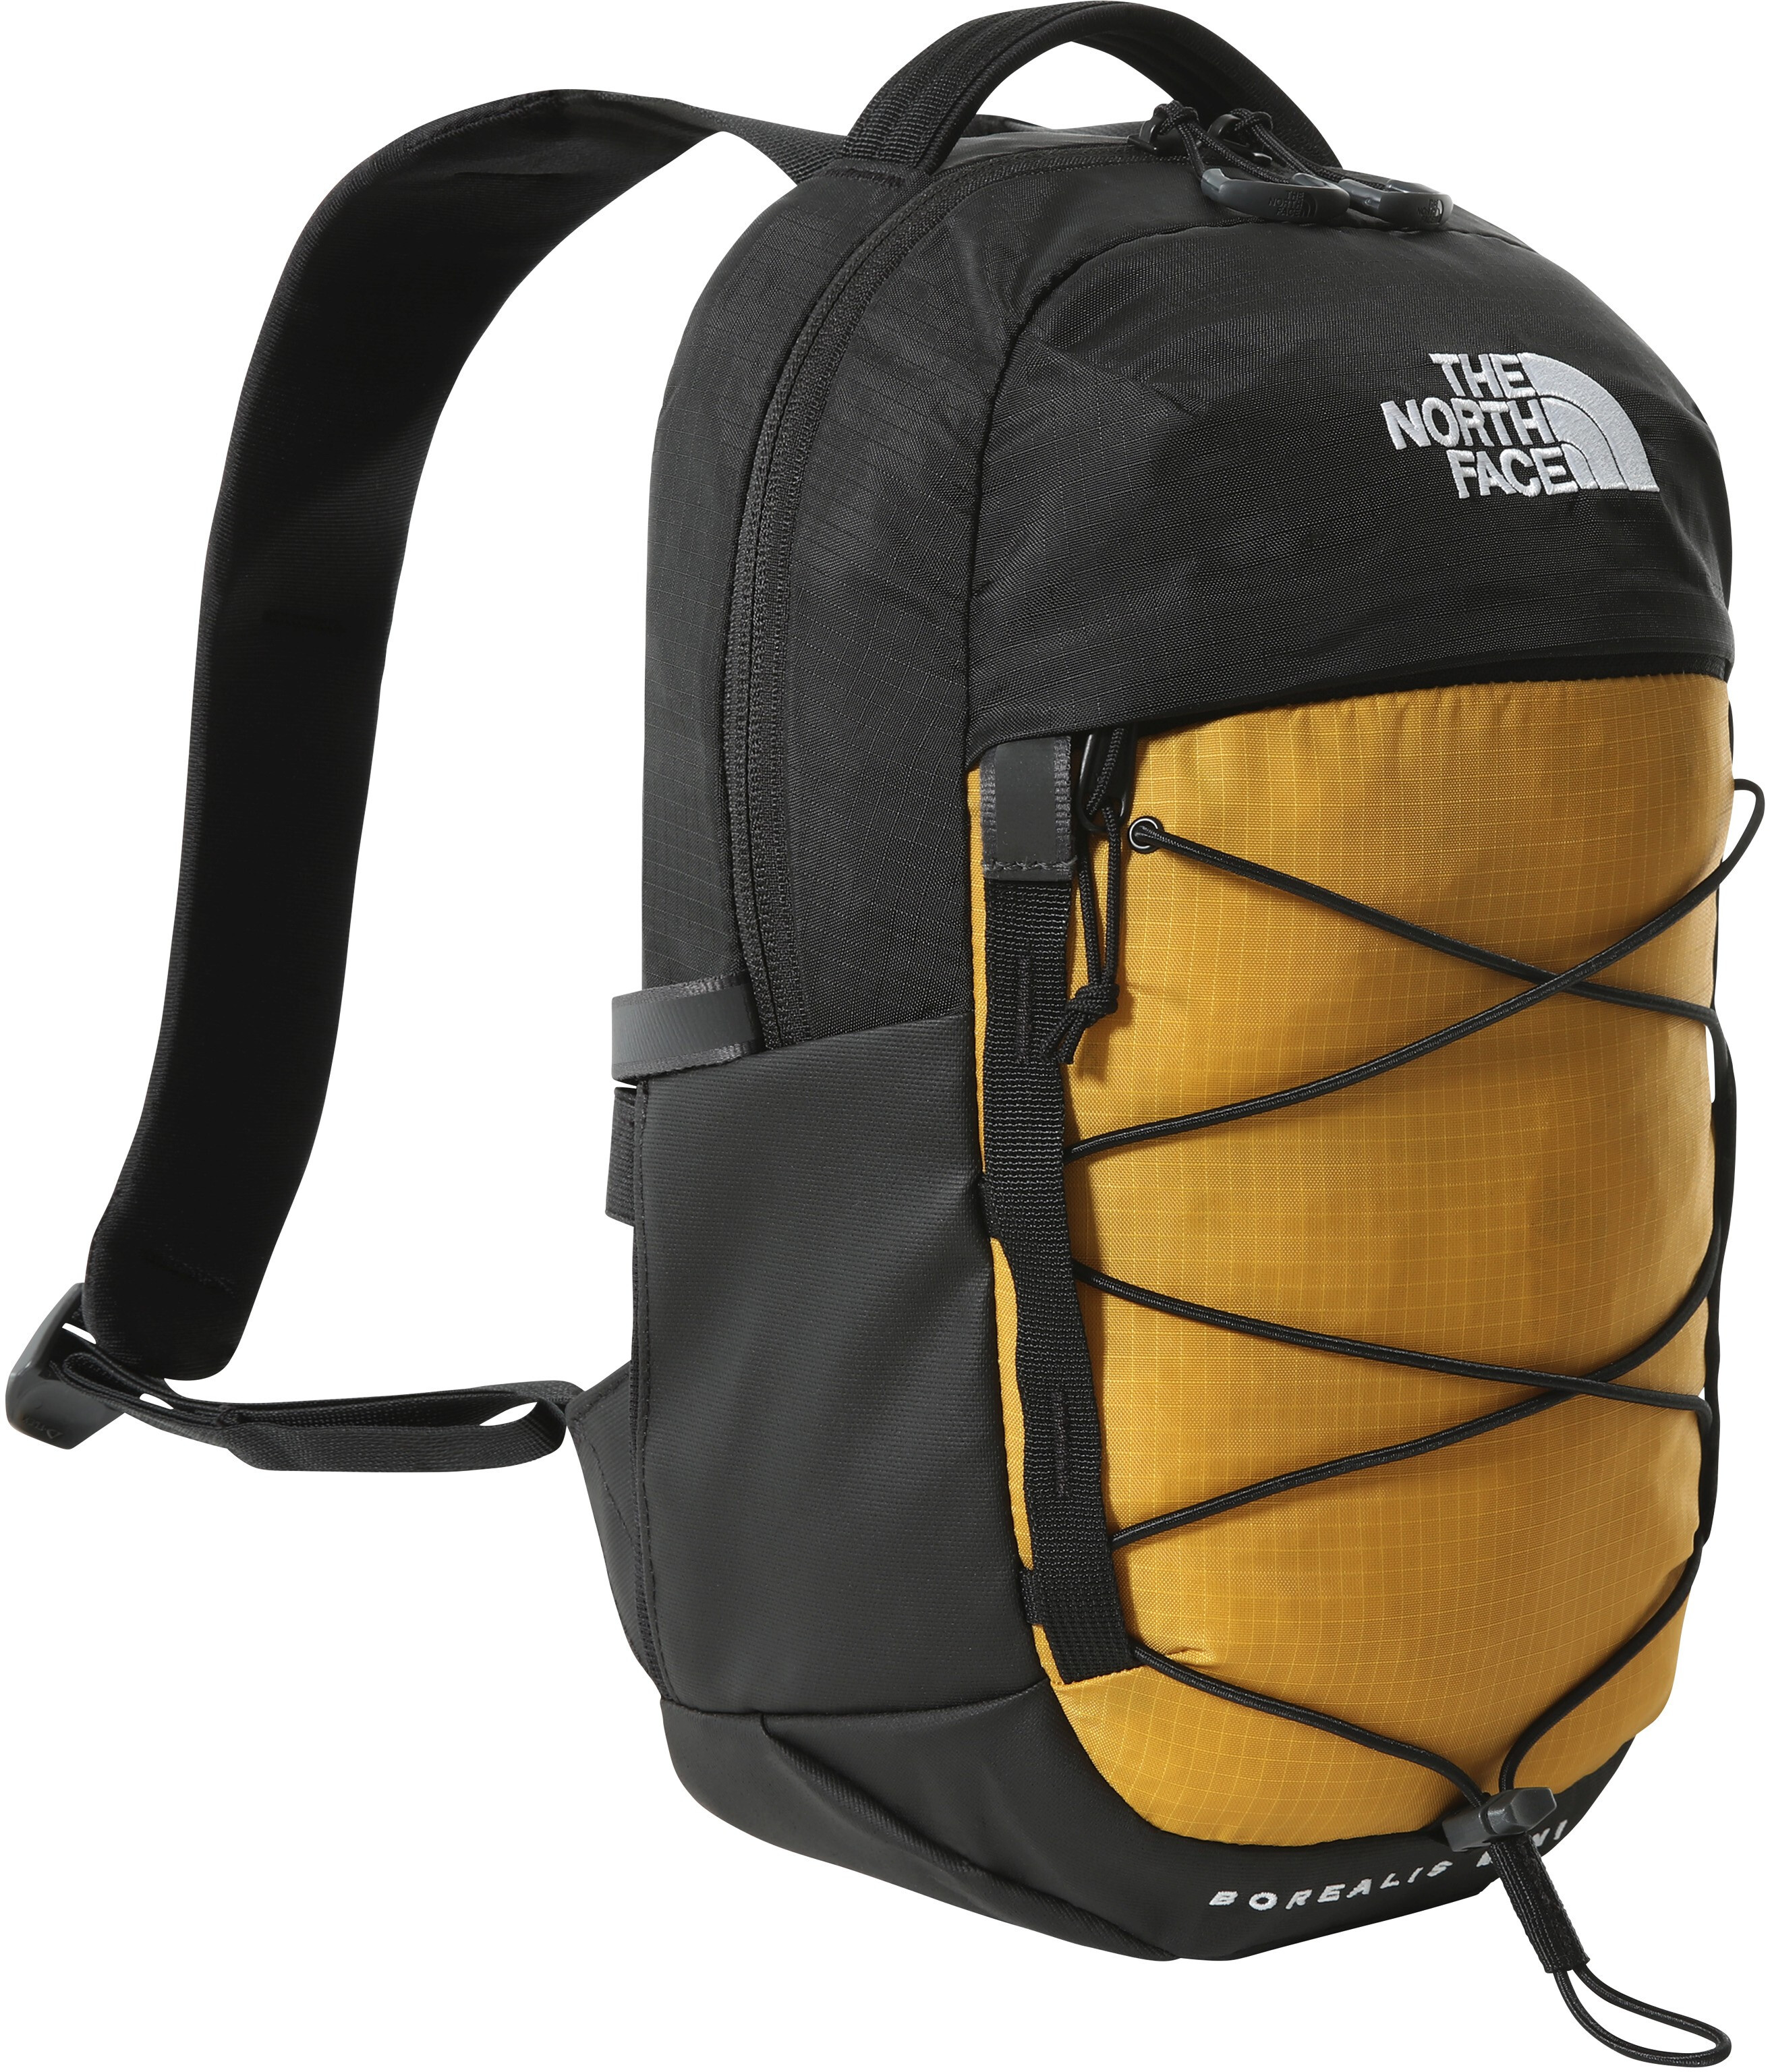 The North Face Borealis Rygsæk Mini, sort/gul | Find outdoortøj, sko